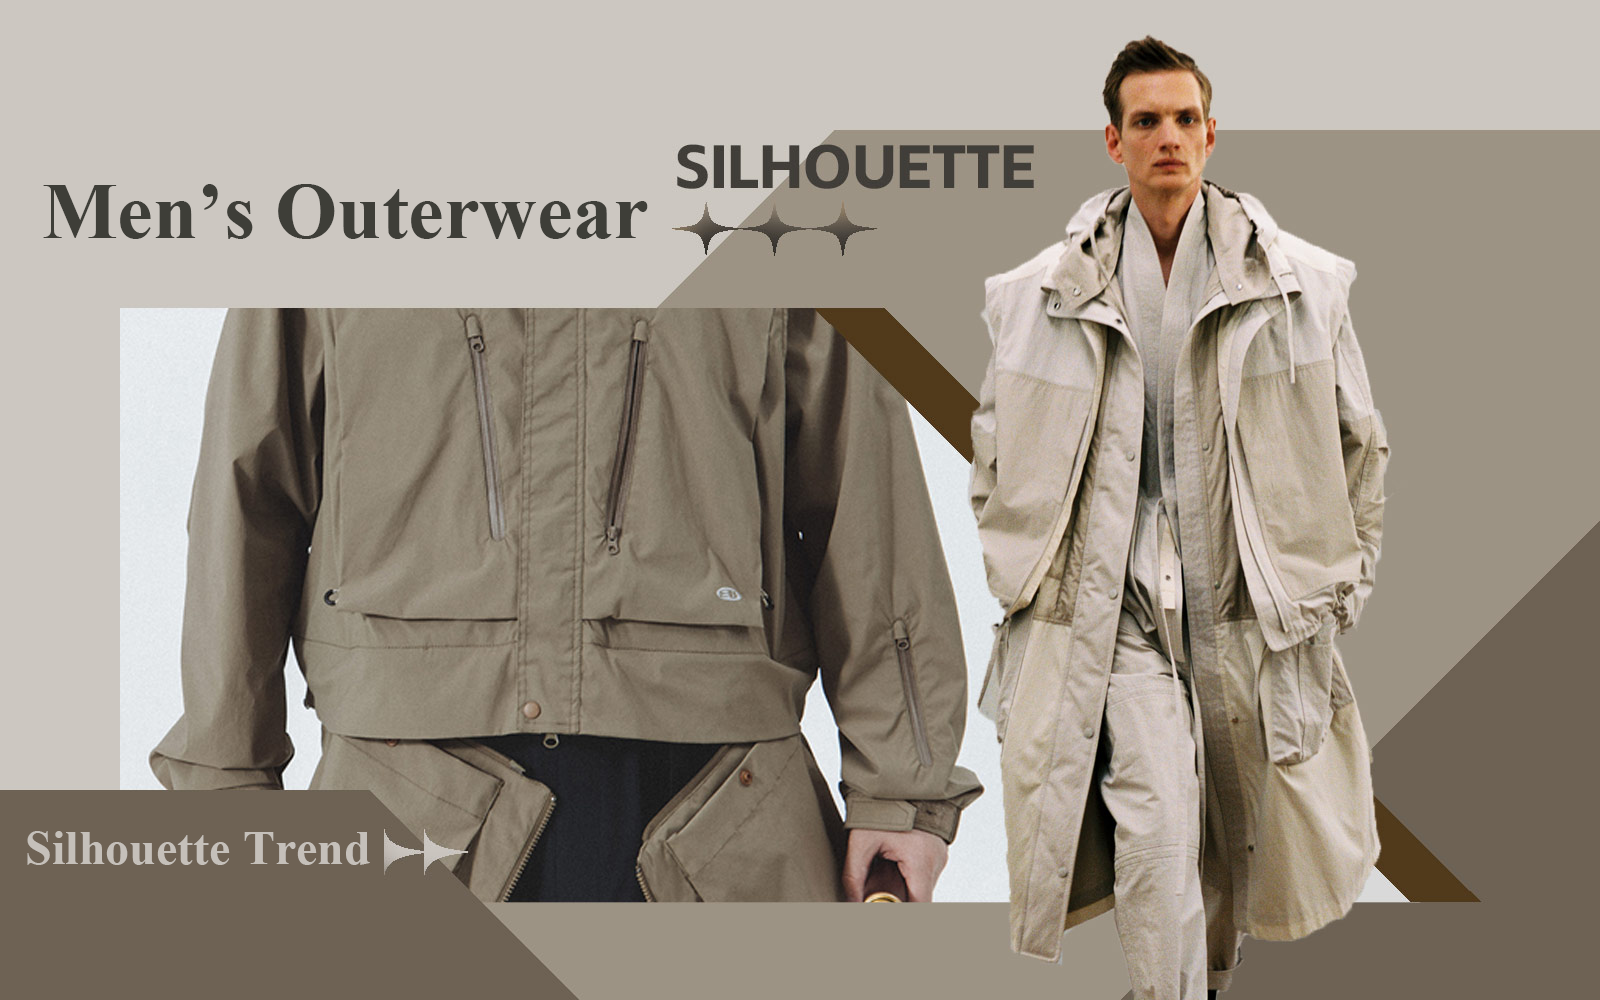 Urbancore -- The Silhouette Trend for Men's Outerwear